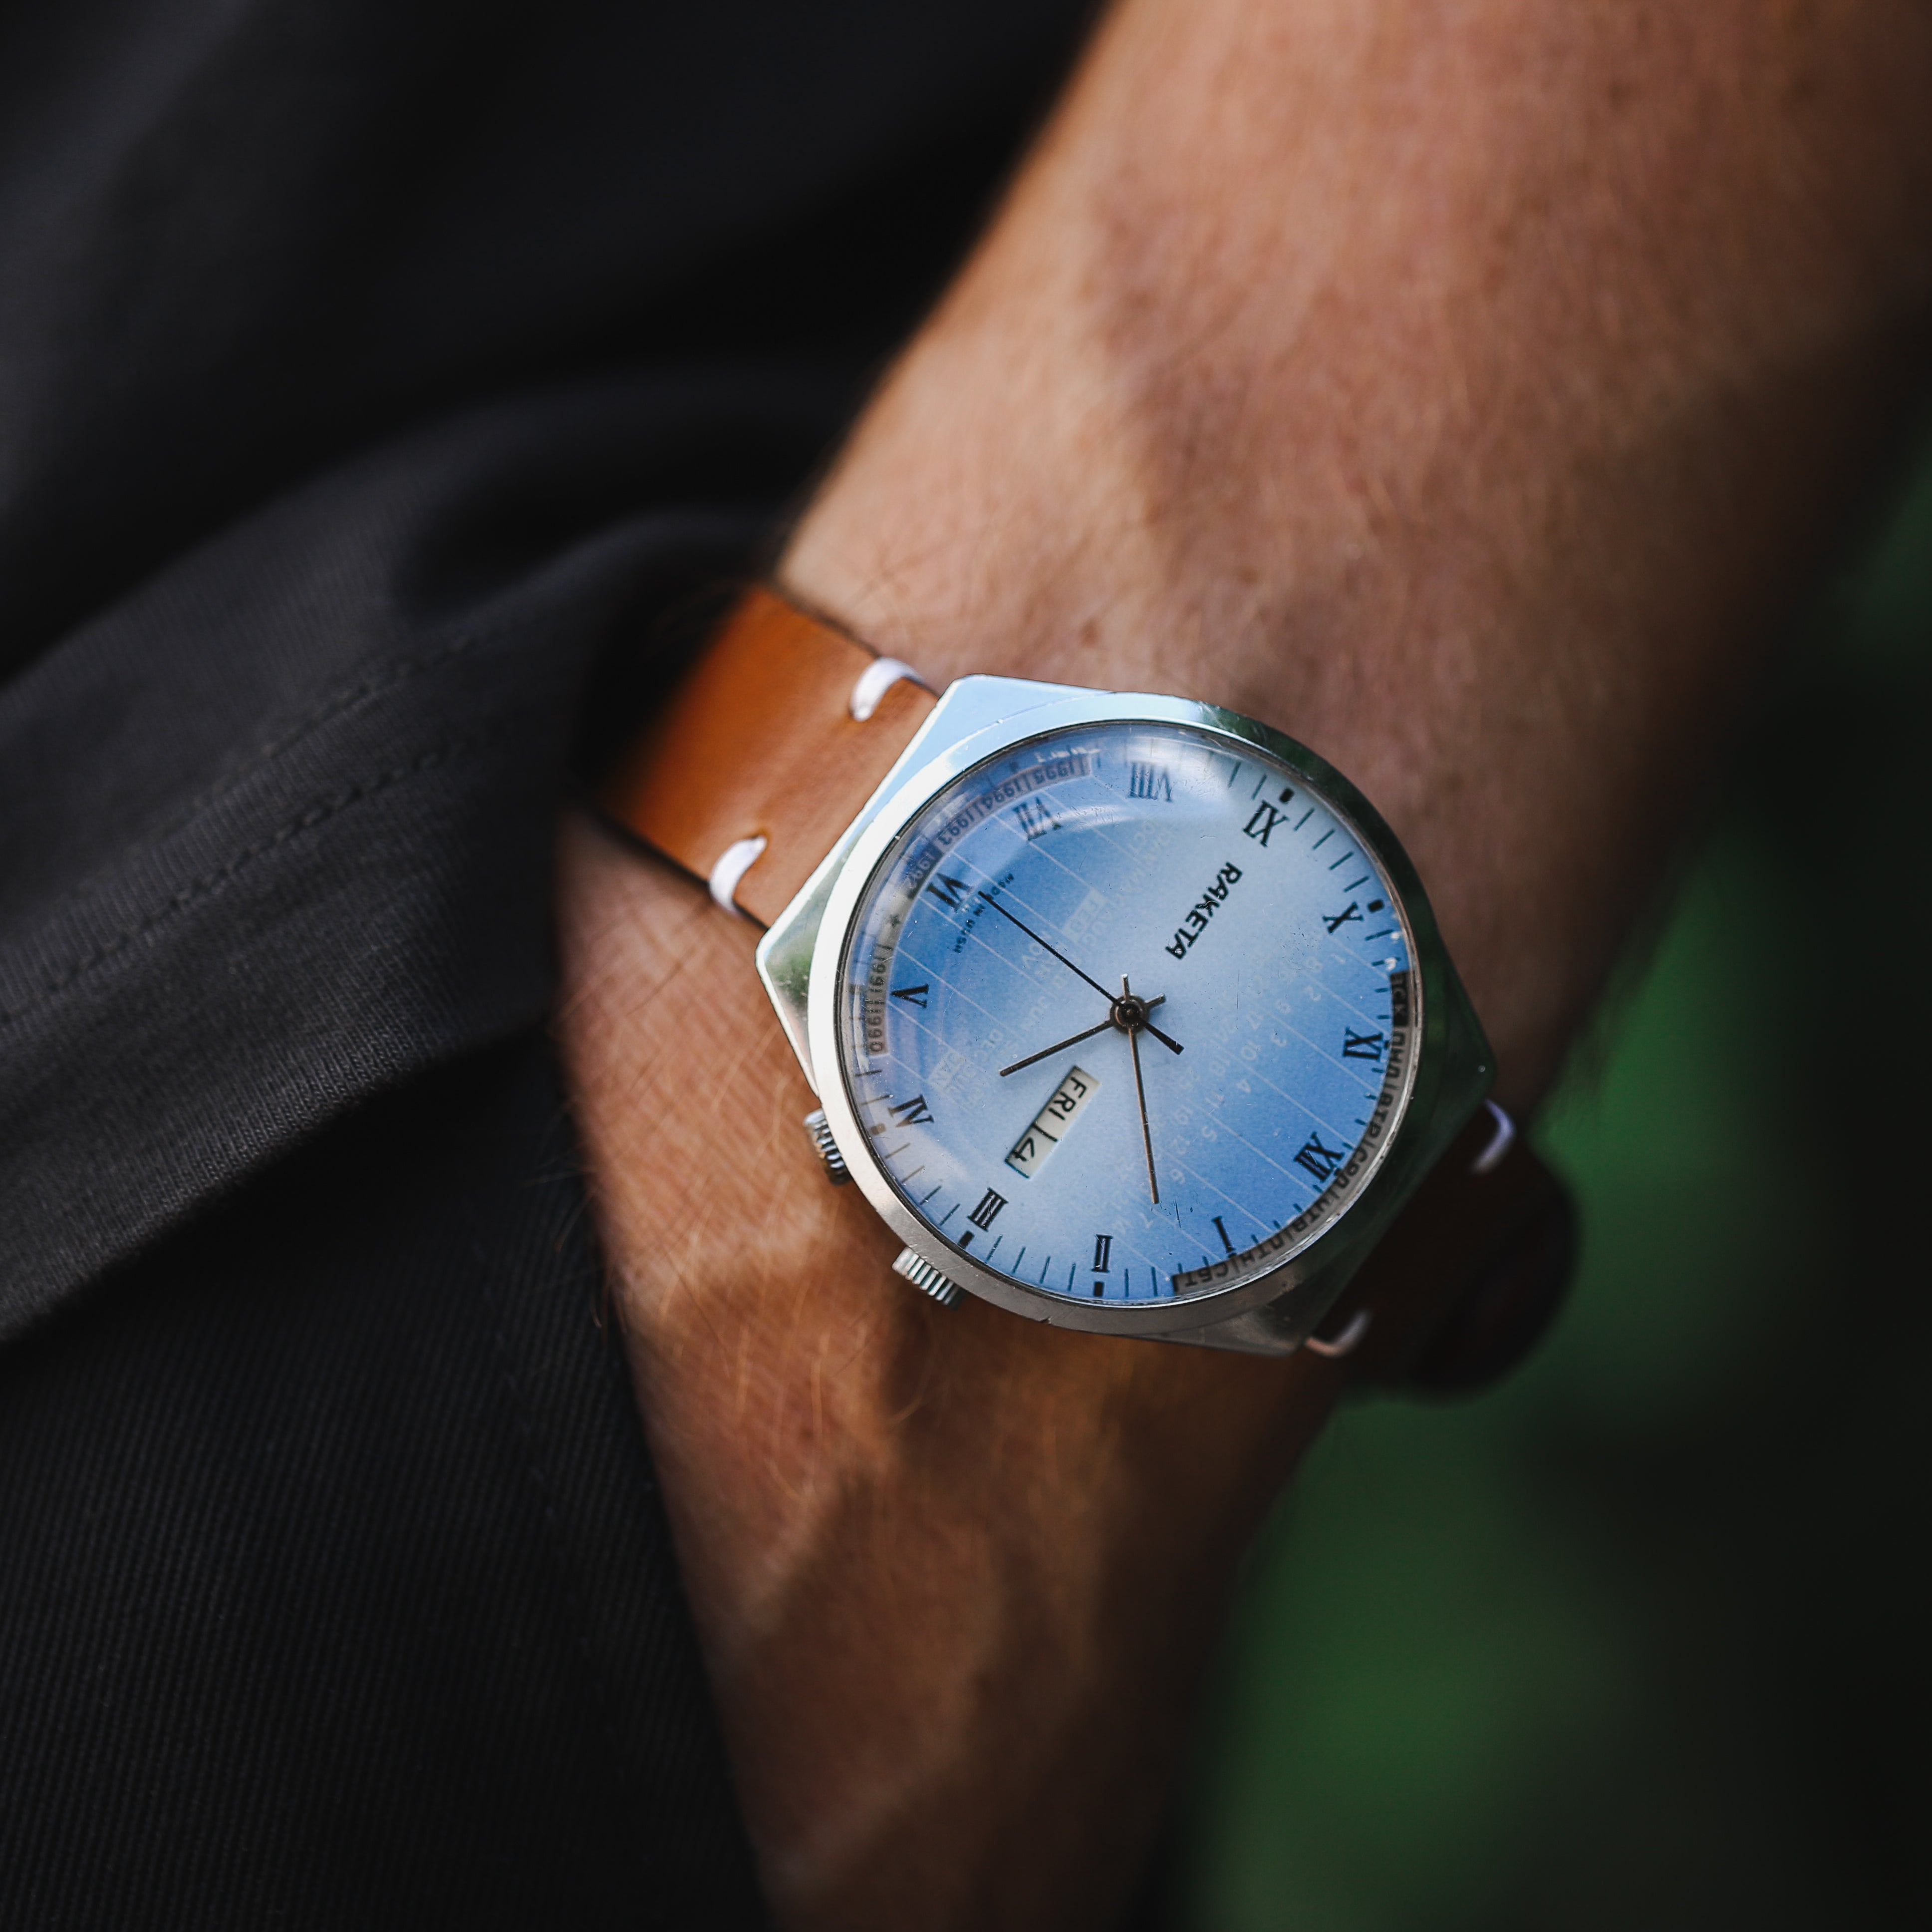 Men's mechanical vintage soviet wrist watch Raketa with leather nato strap